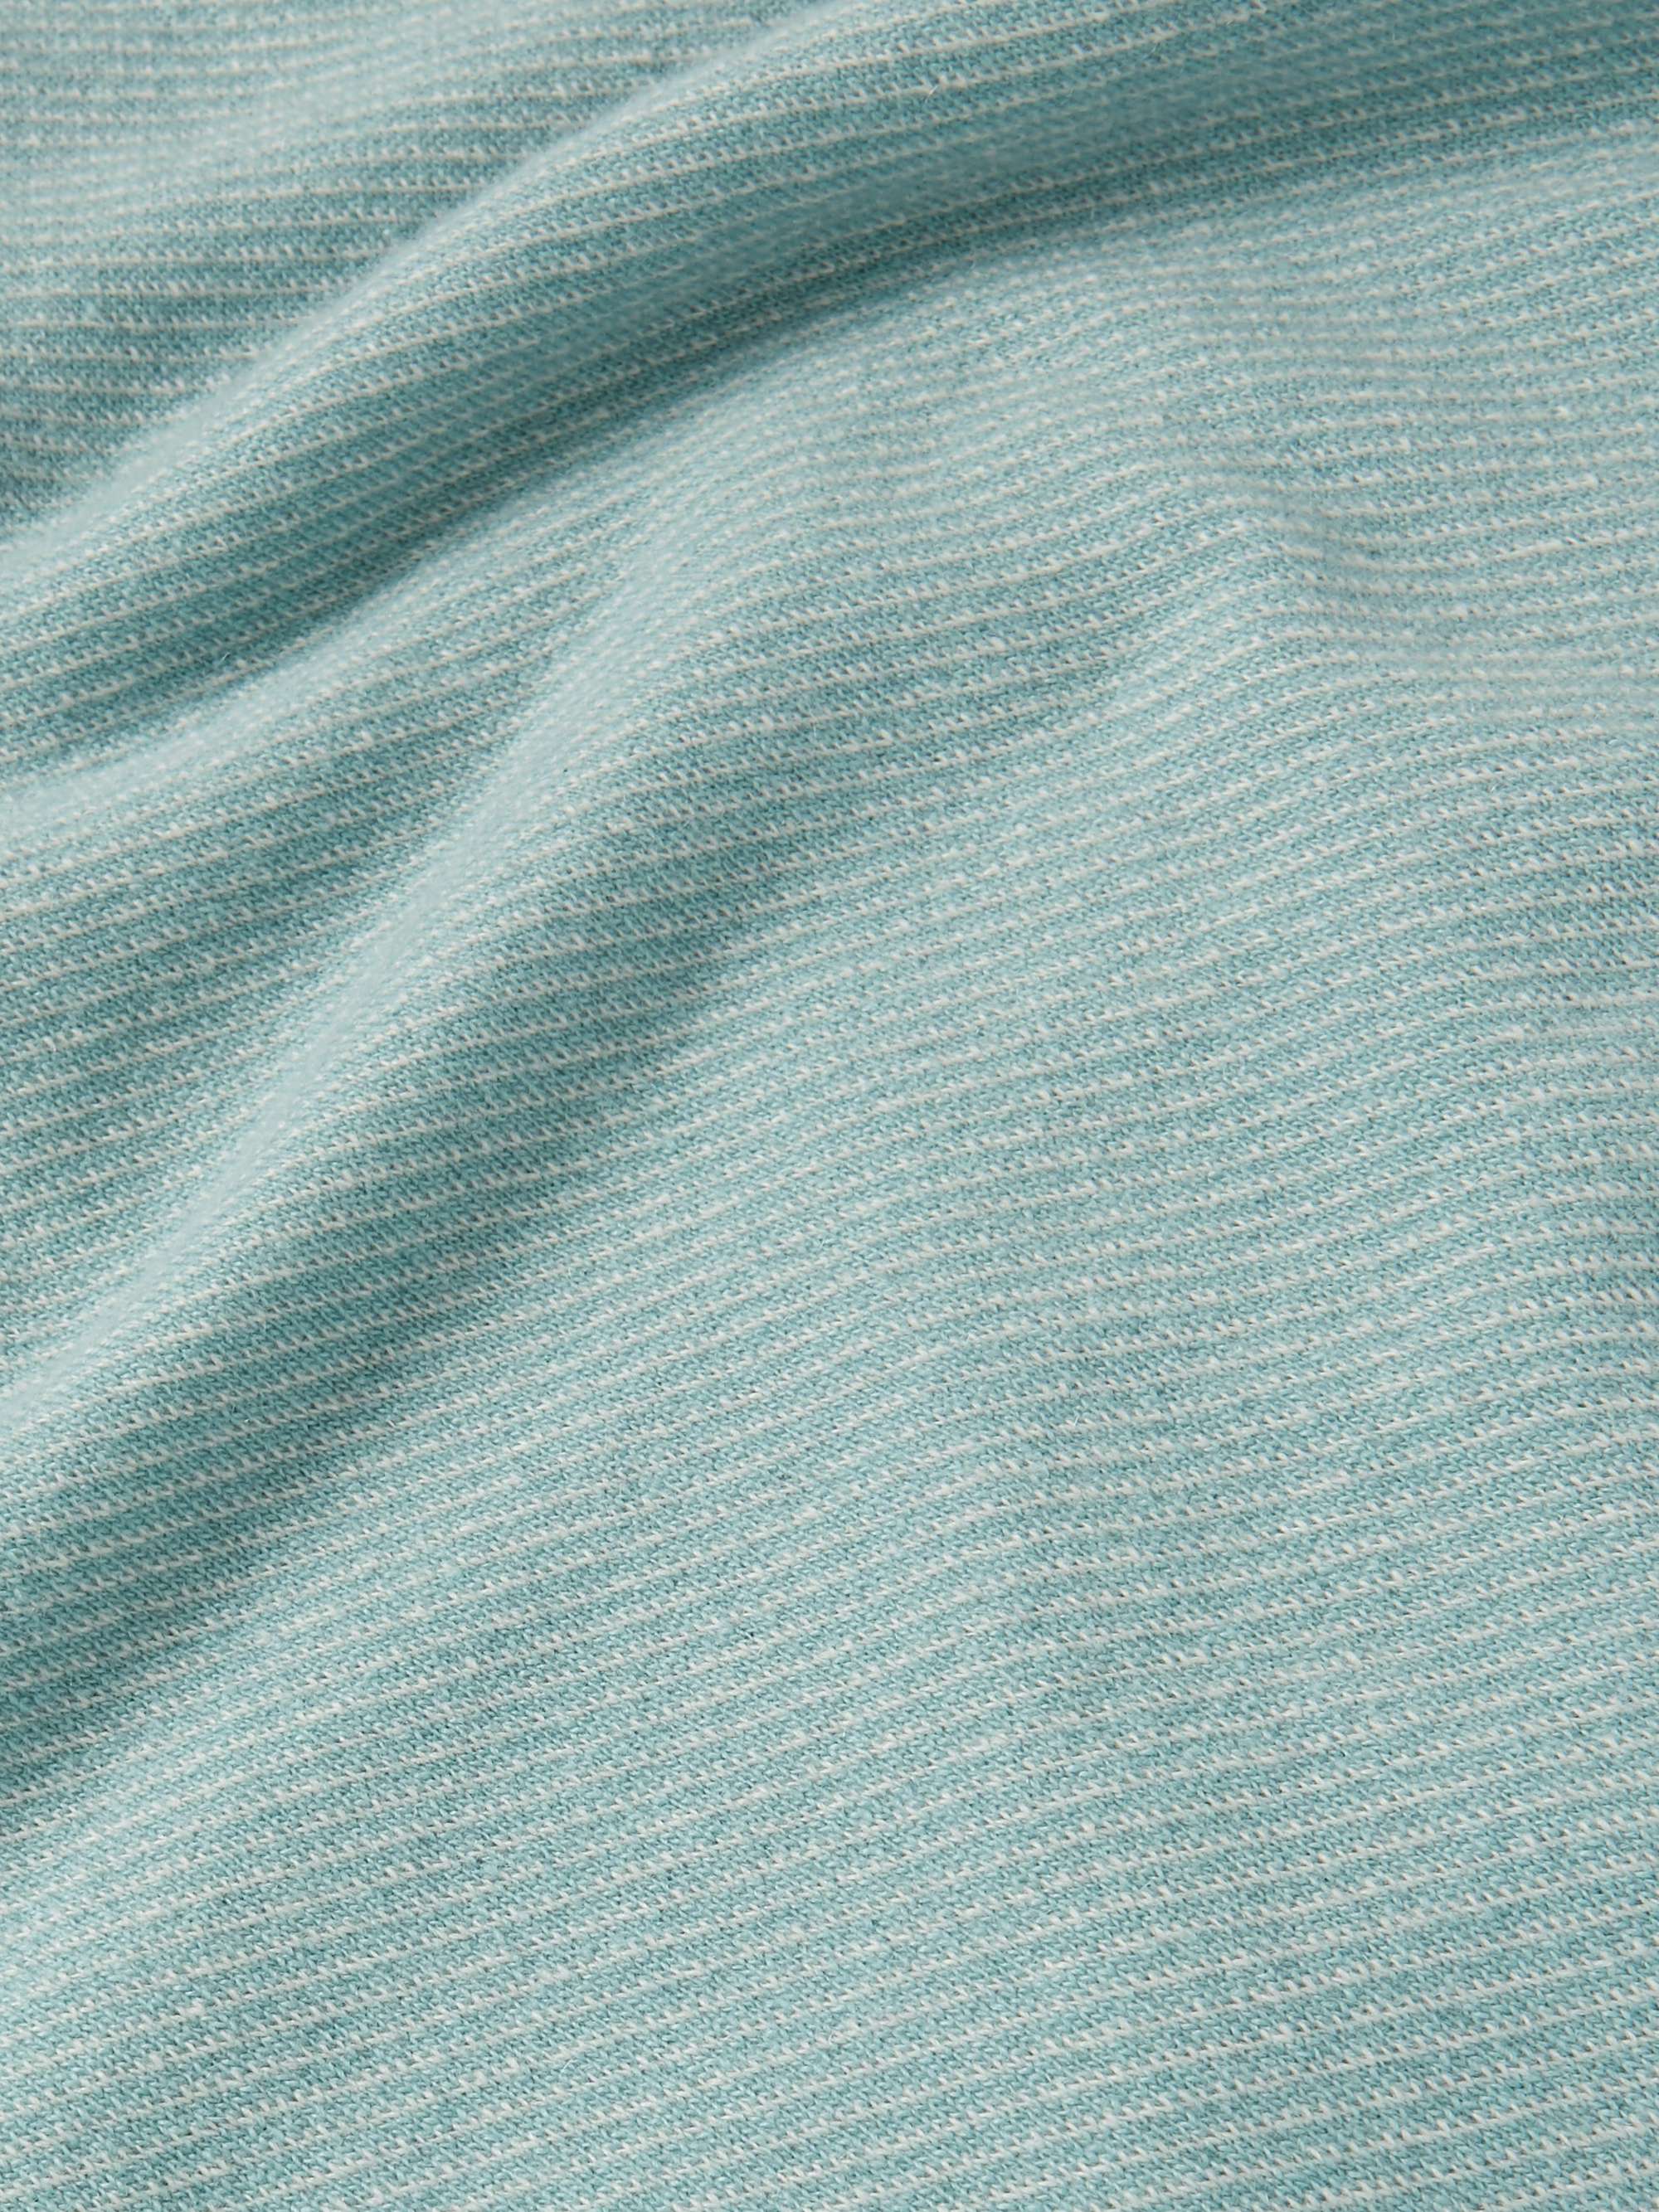 LORO PIANA Striped Cashmere Half-Zip Sweater